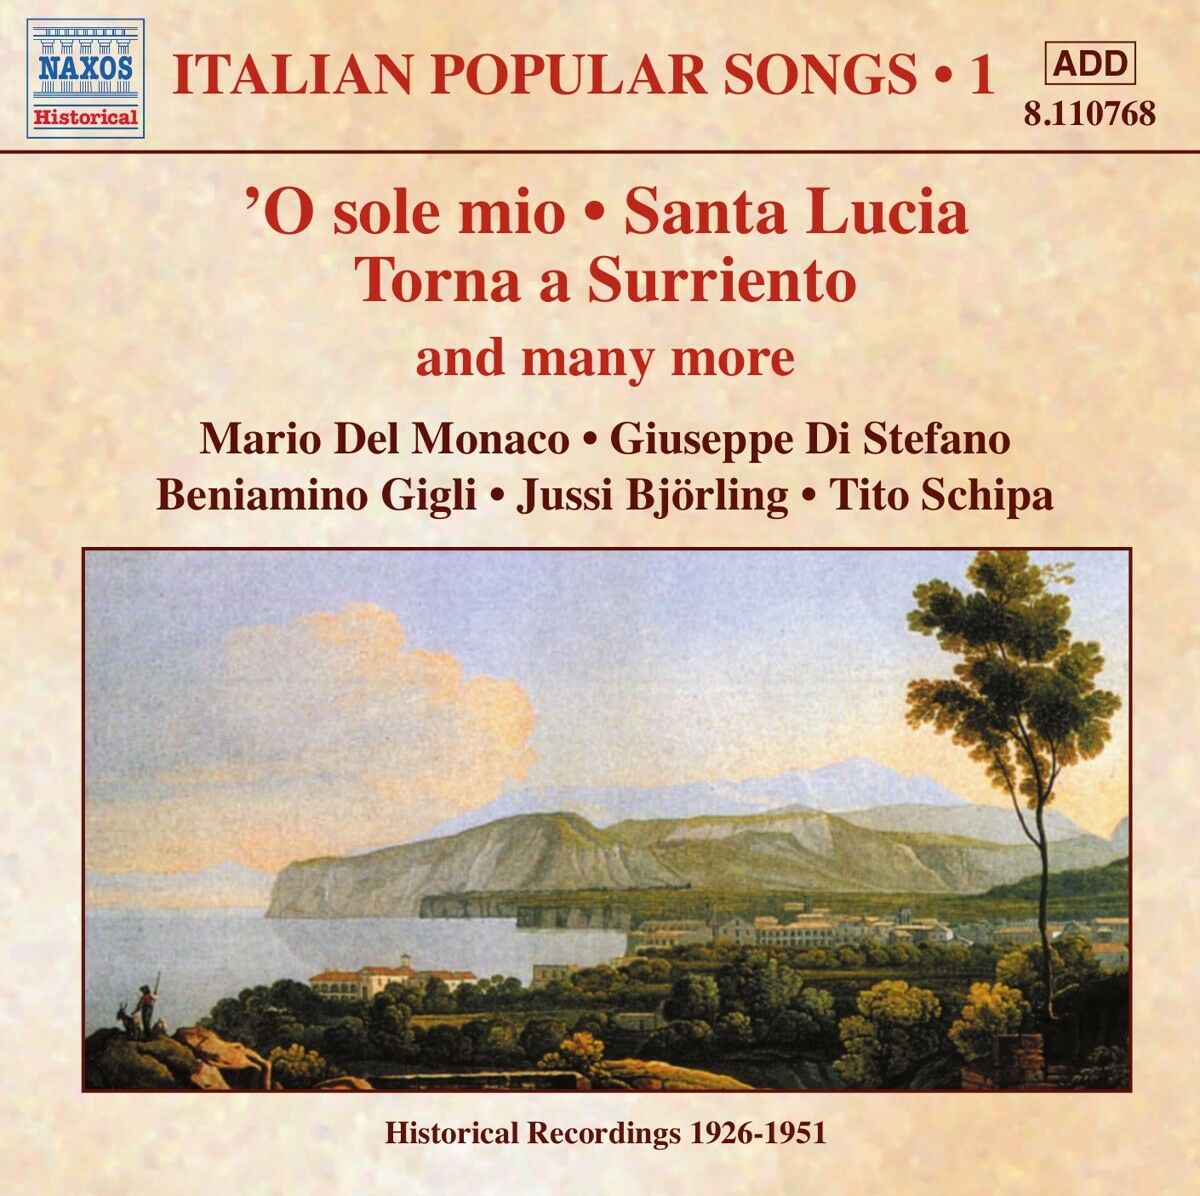 Italian Popular Songs Vol. 1